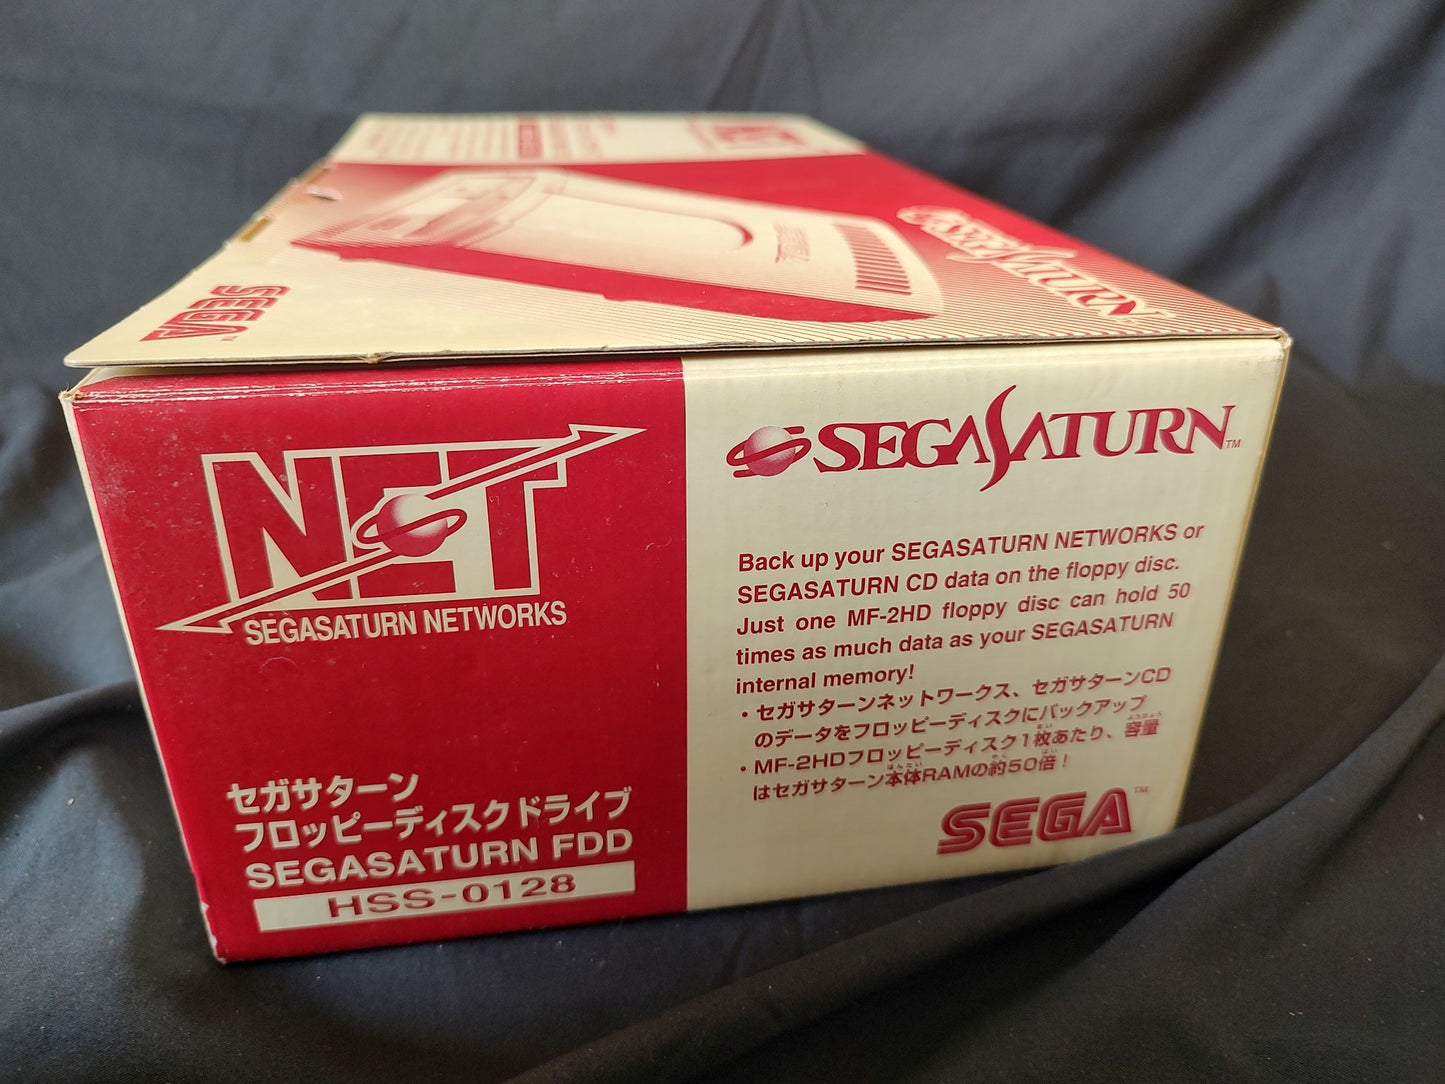 SEGA SATURN FDD Drive HSS-0128 SAGASATURN NETWORKS Boxed/ Not tested -g0322-